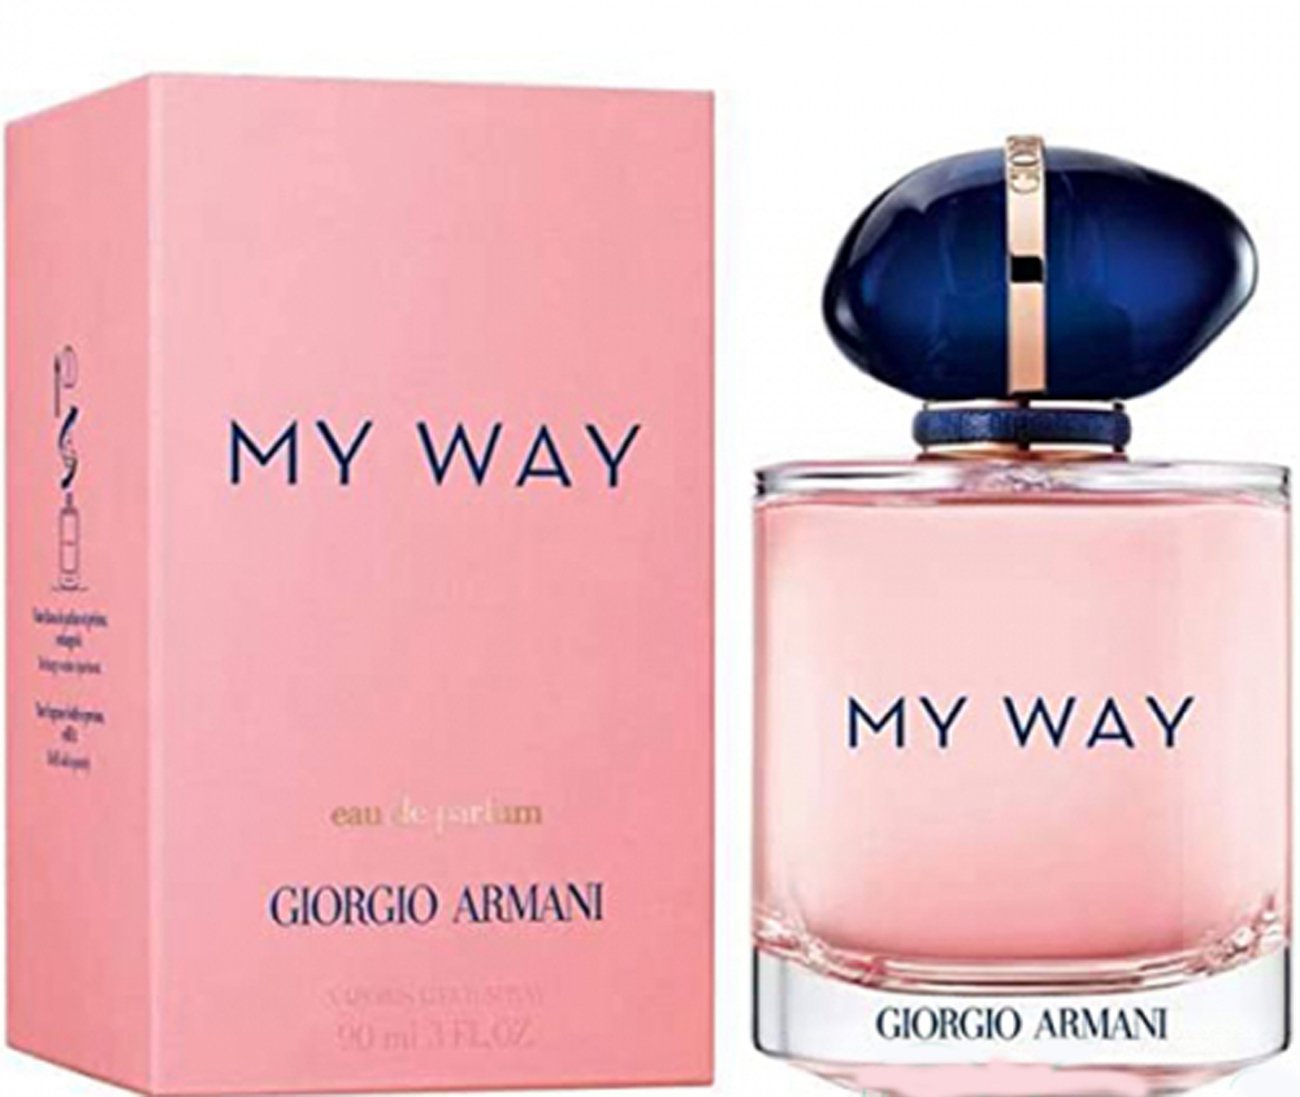 Giorgio Armani My Way EDP 90ml women NEW